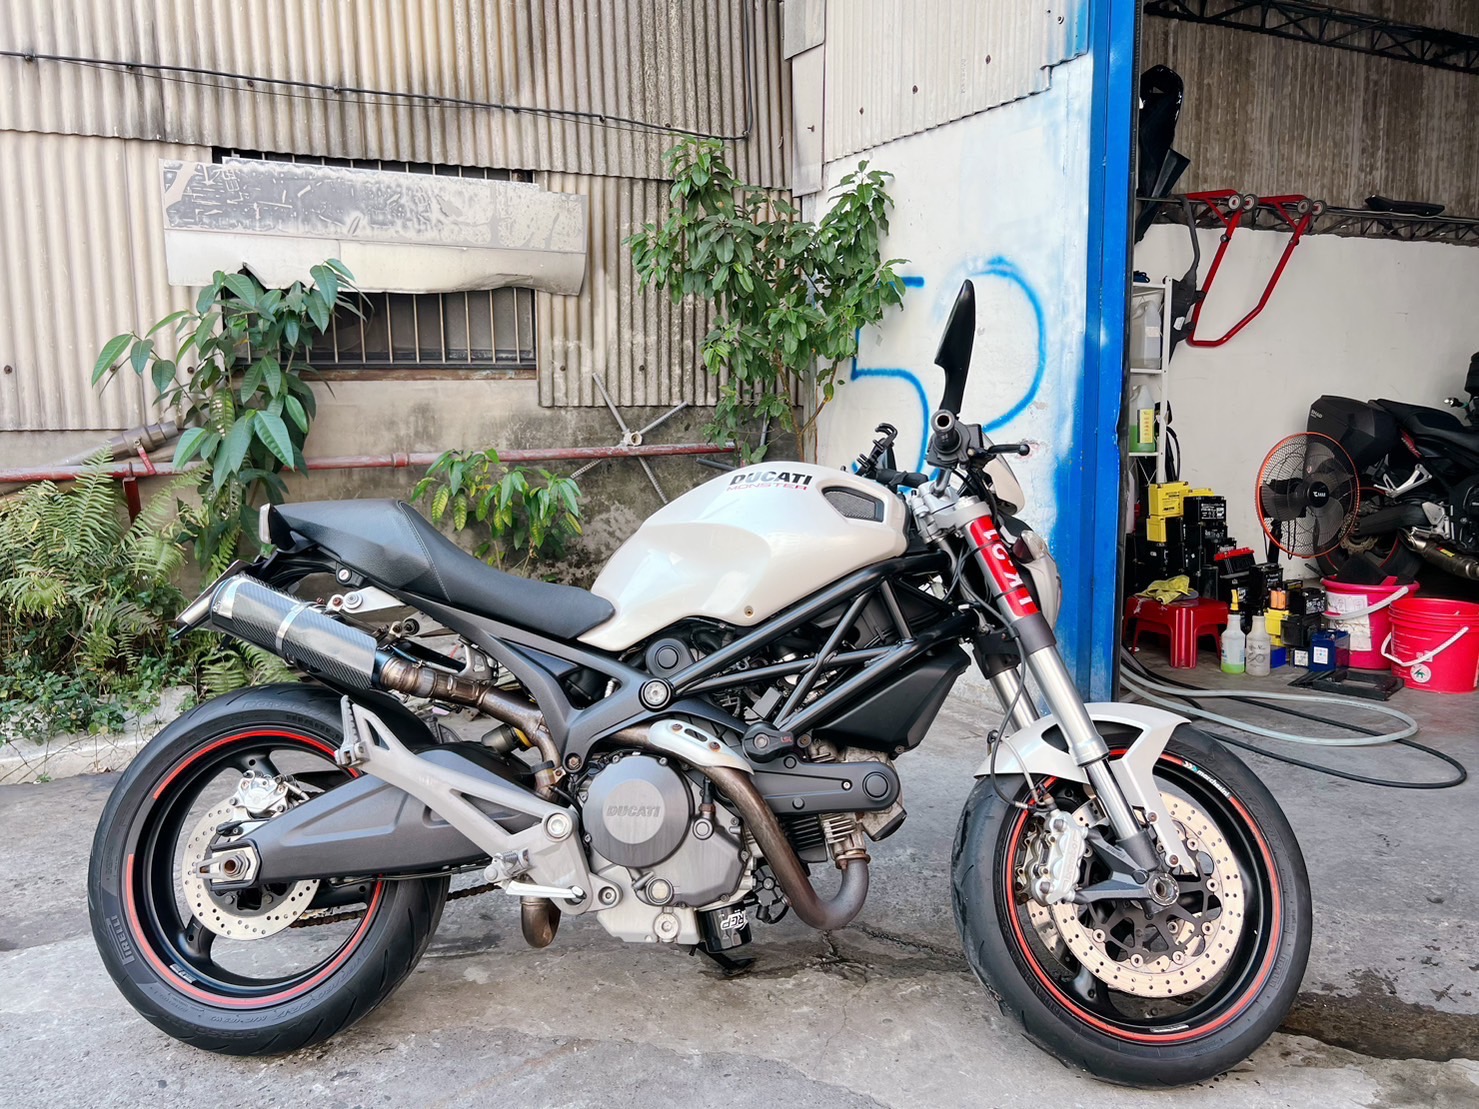 DUCATI MONSTER696 - 中古/二手車出售中 Ducati Monster 696 可分期 可換車 歡迎詢問 line:@q0984380388 | 個人自售